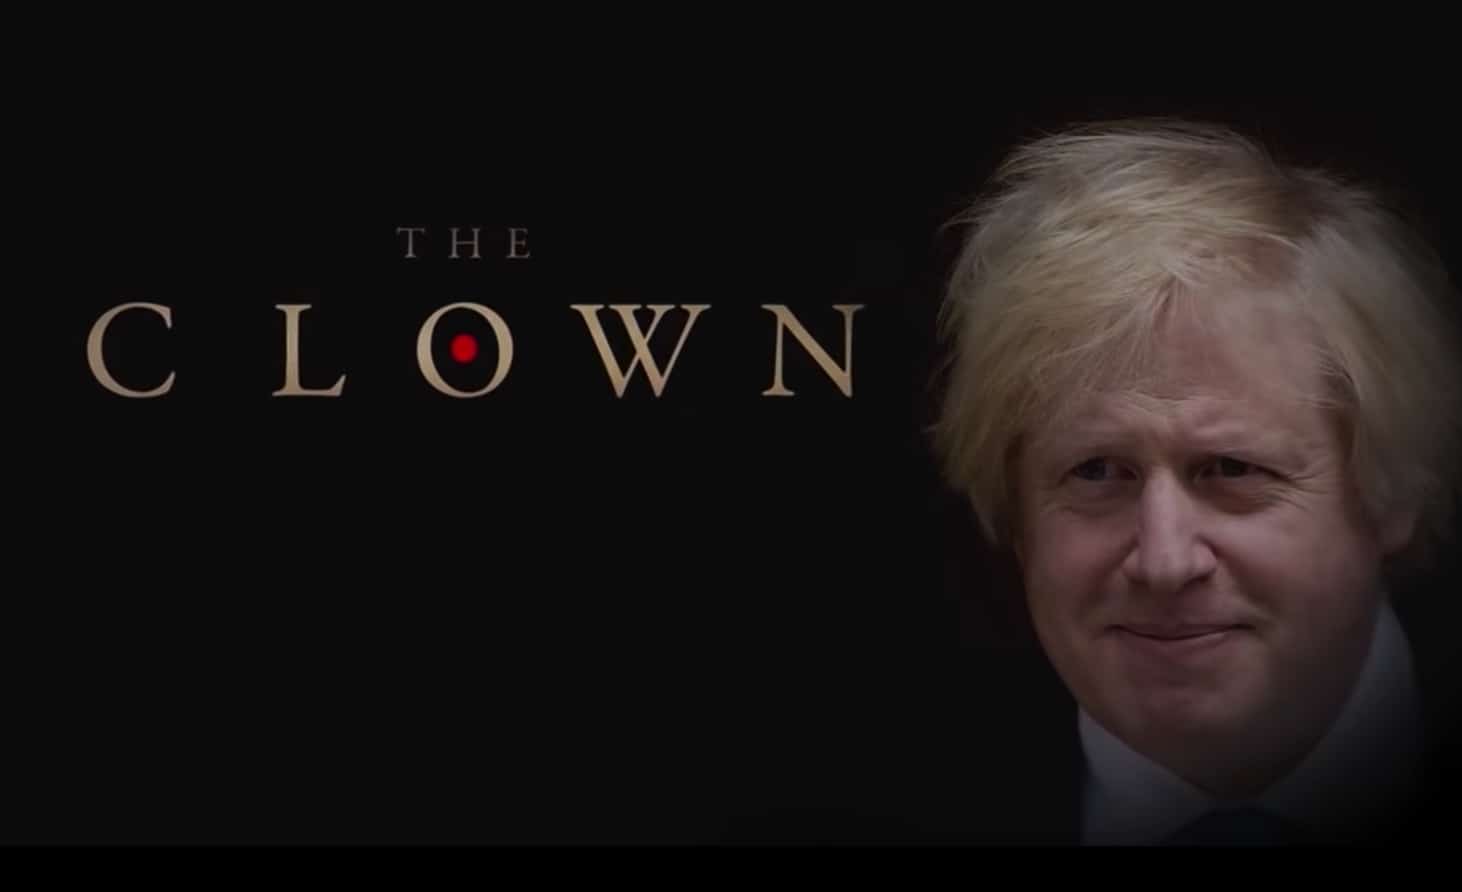 Germans release spoof Brexit video dubbed “The Clown”